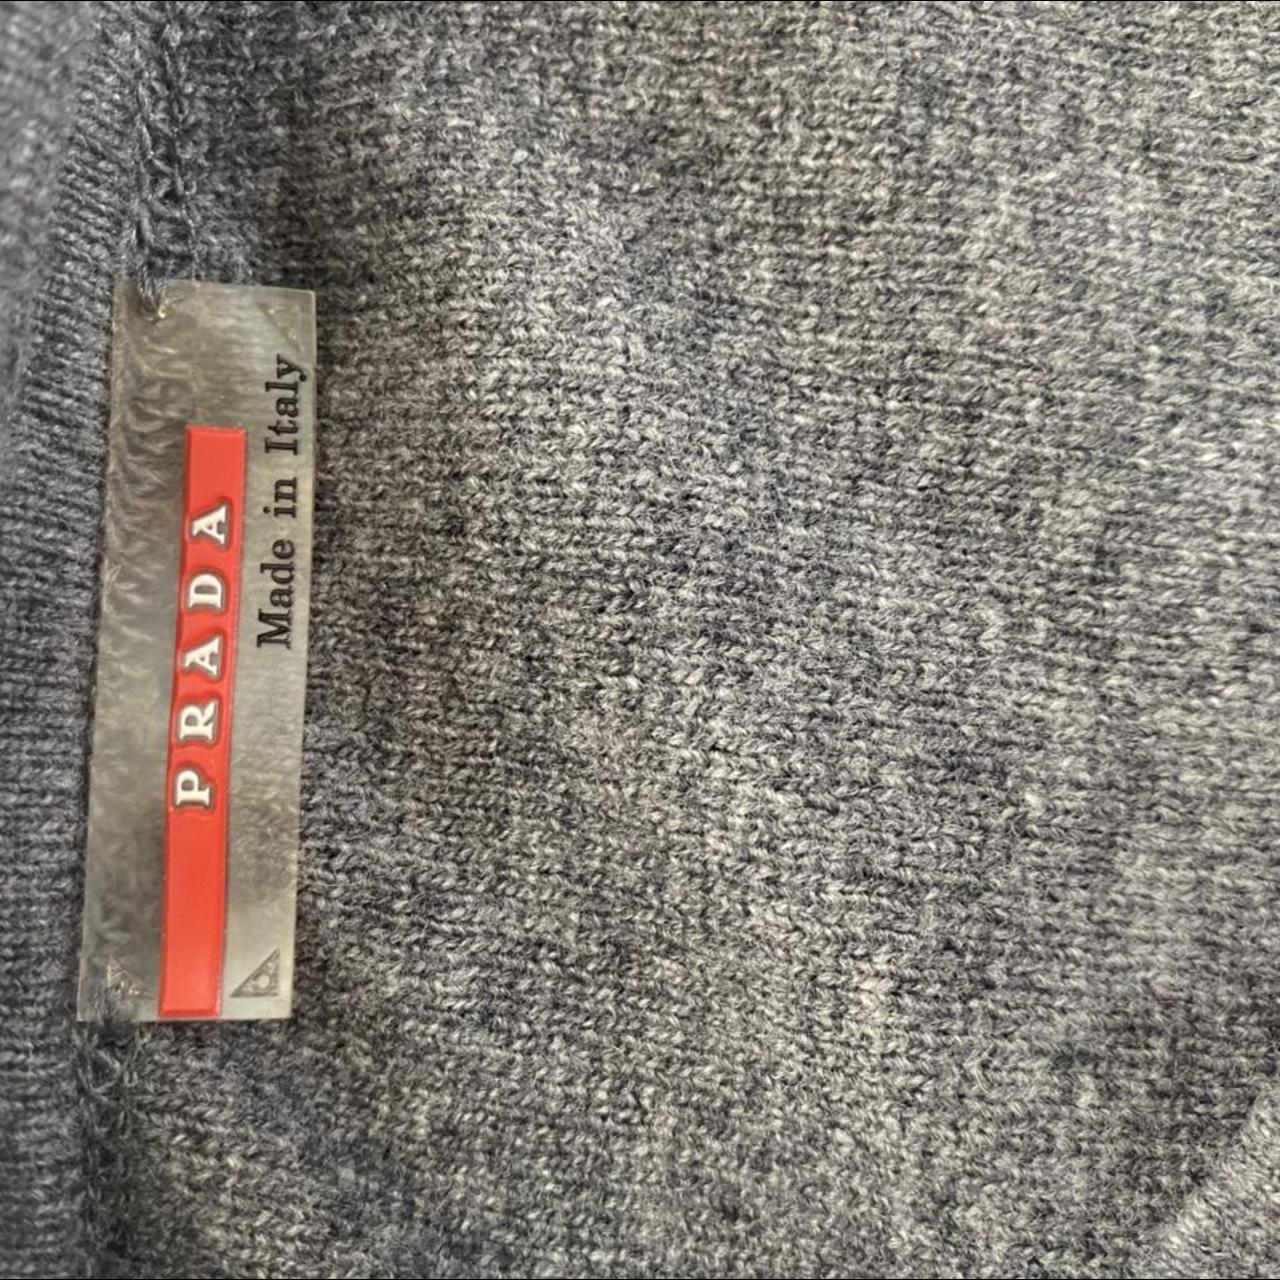 Stunning PRADA wool cardigan… fits a size 6-10, so - Depop